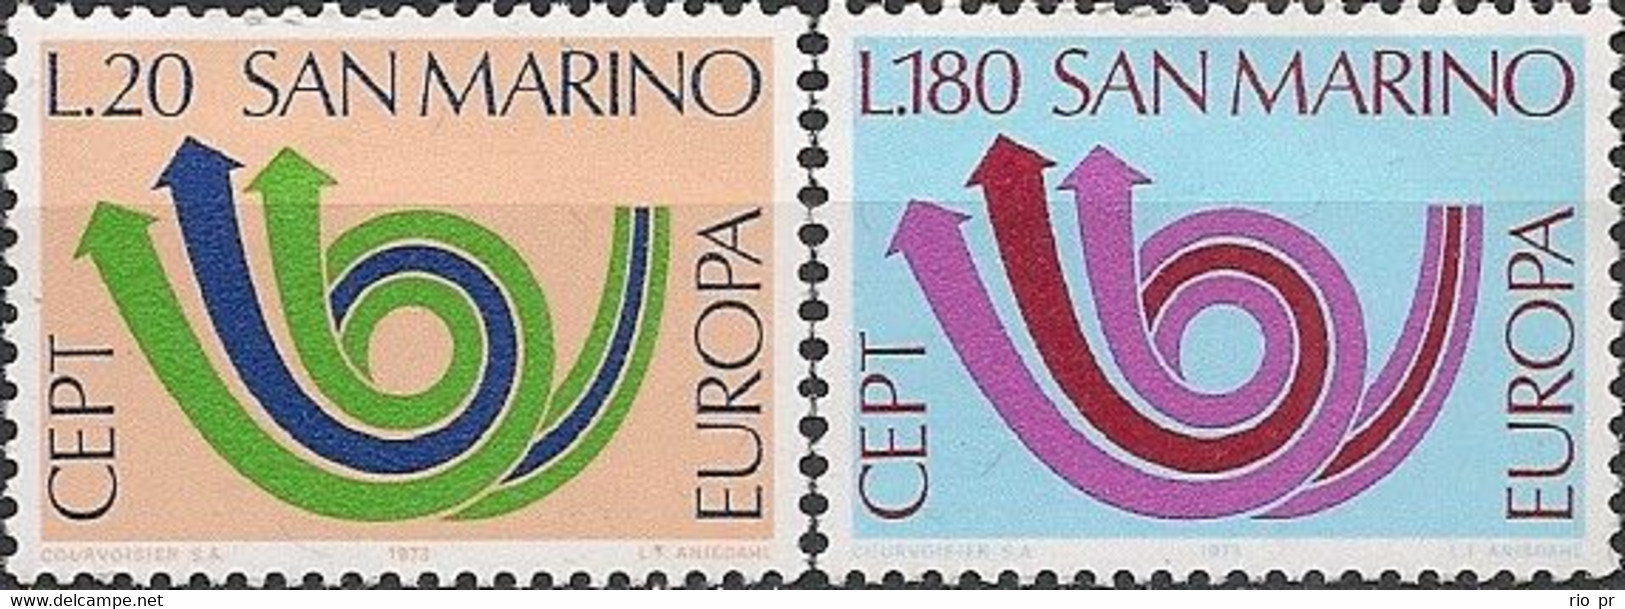 SAN MARINO - COMPLETE SET EUROPA ISSUE 1973 - MNH - 1973